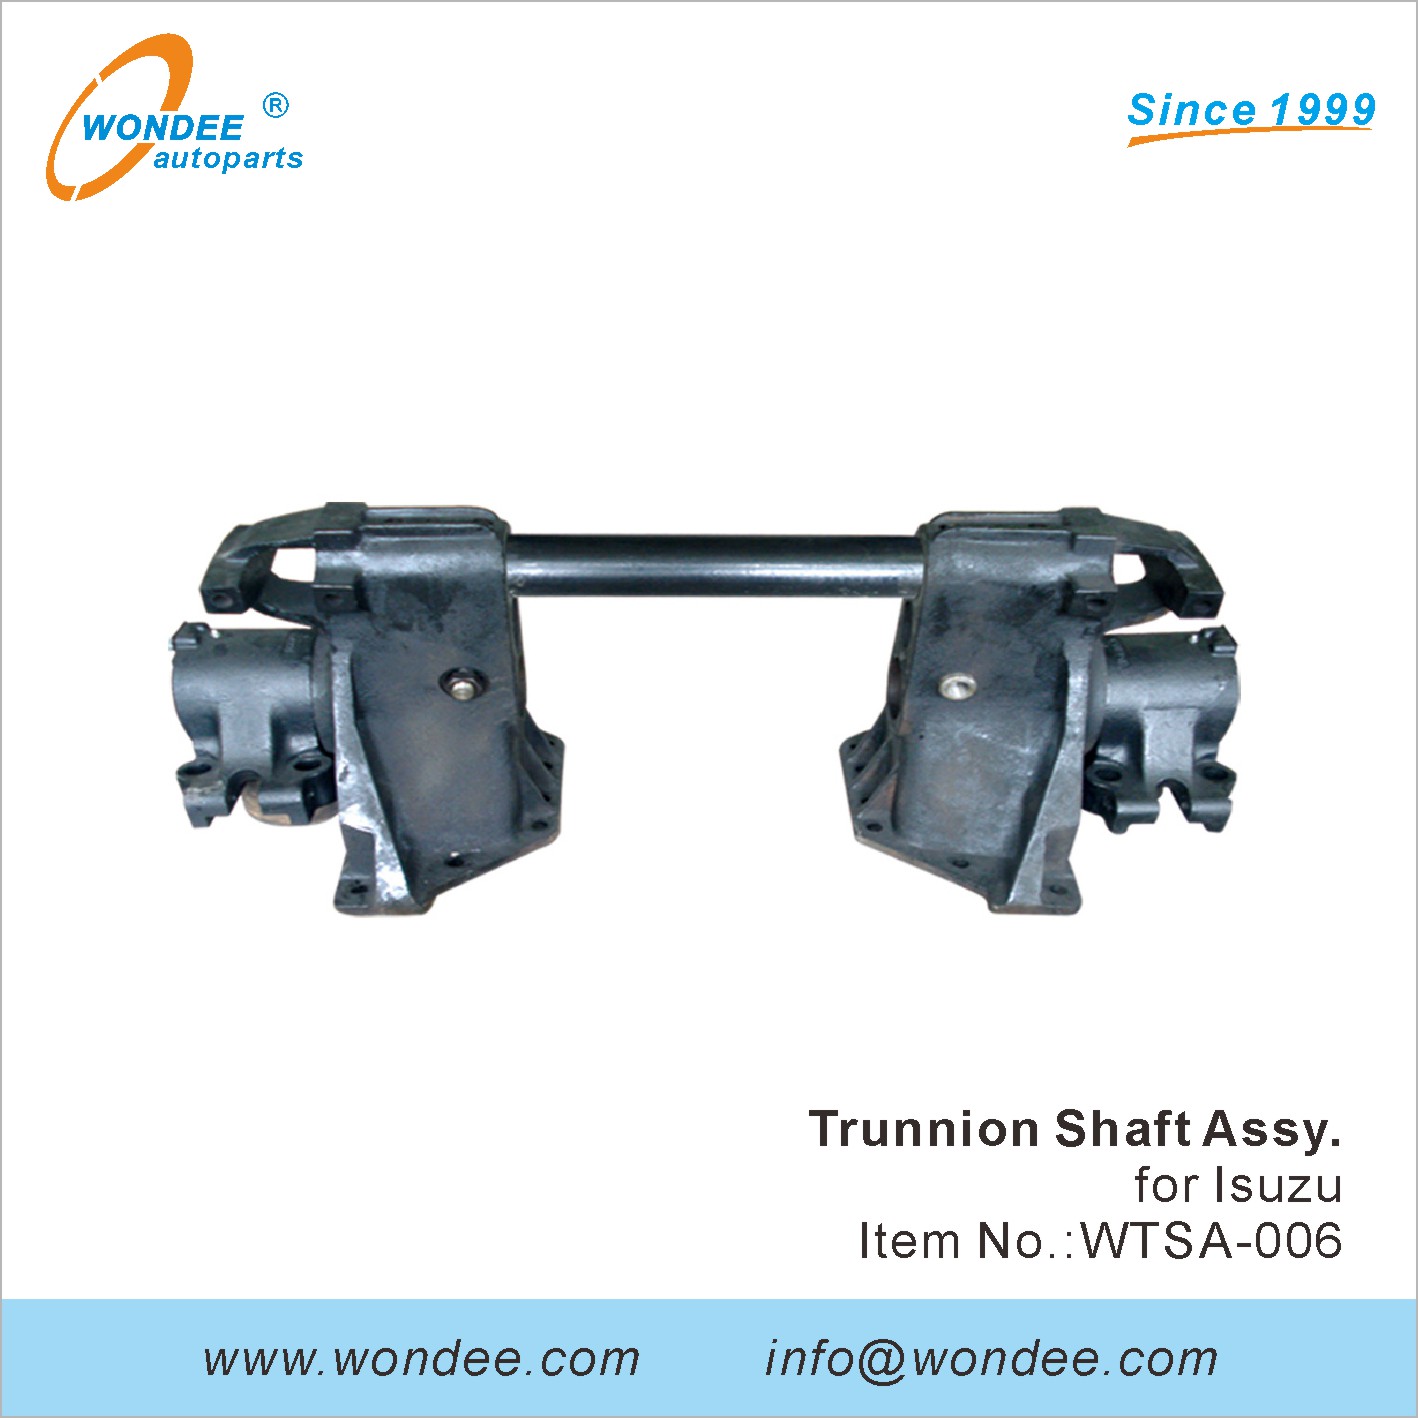 WONDEE trunnion shaft assembly (6)